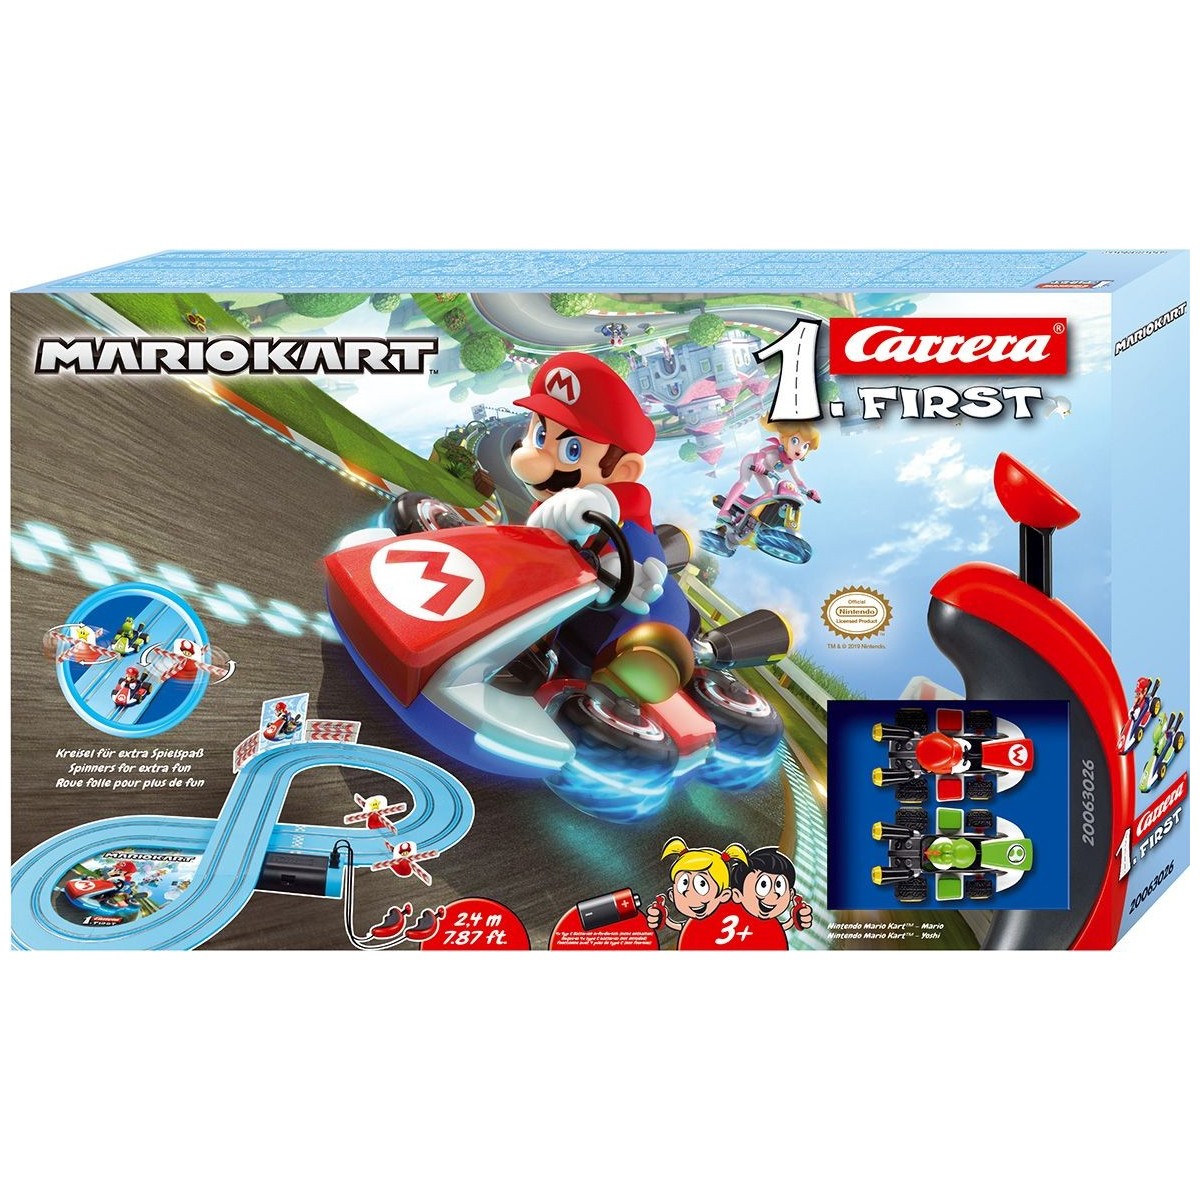 FIRST Nintendo Mario Kart